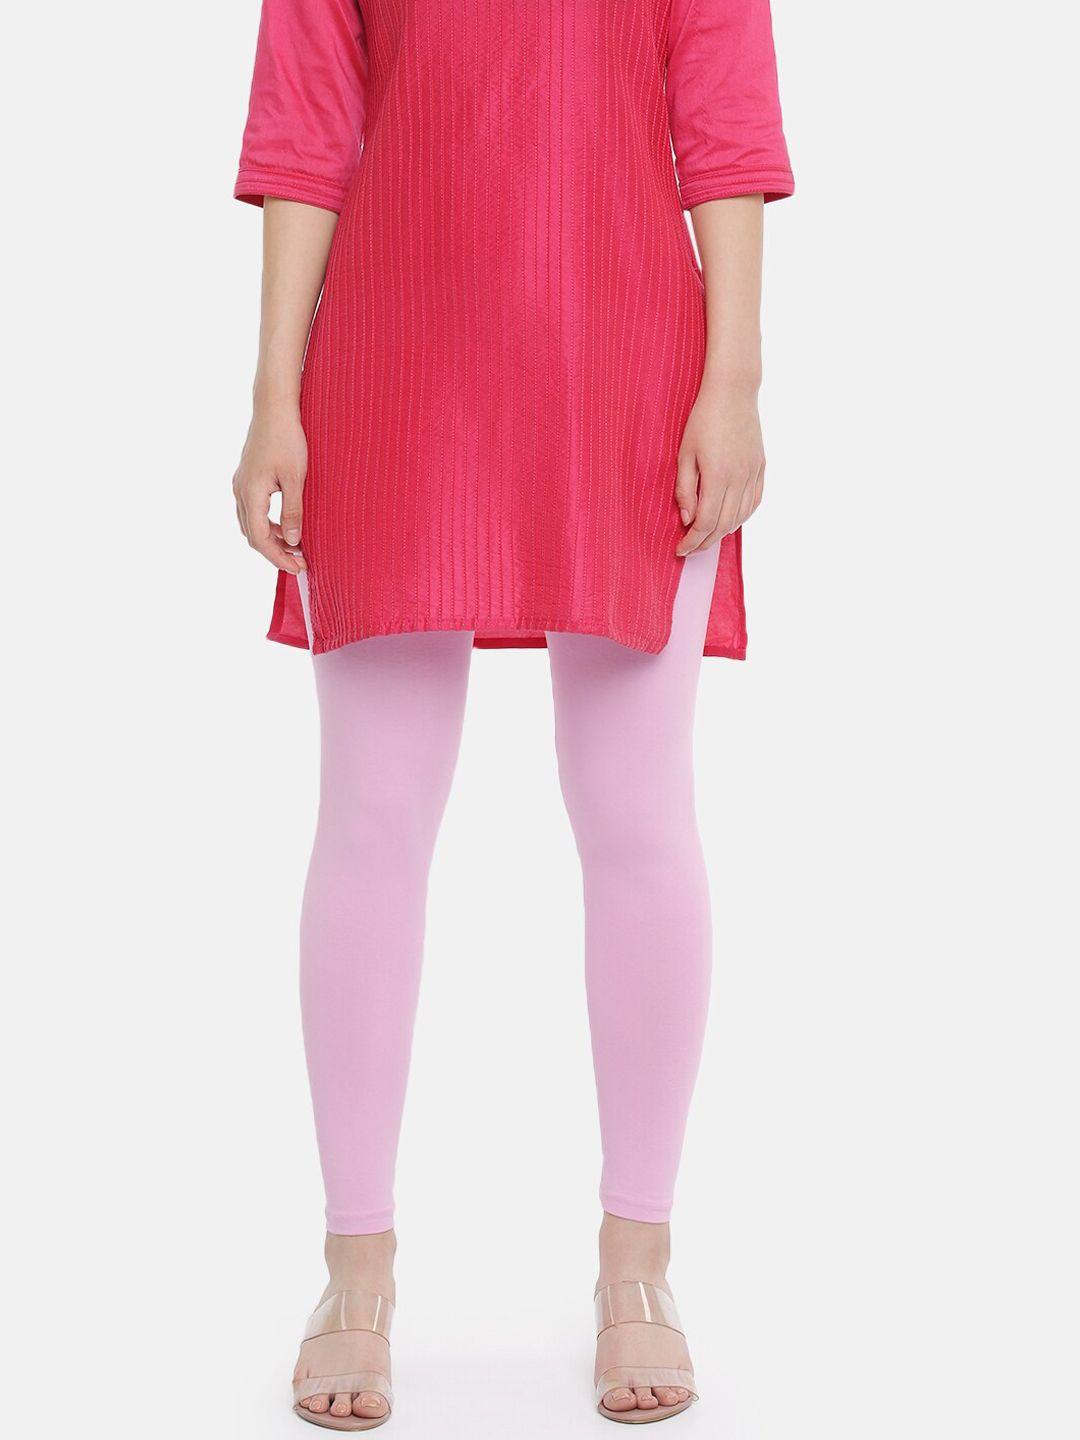 dollar missy women pink solid ankle-length leggings